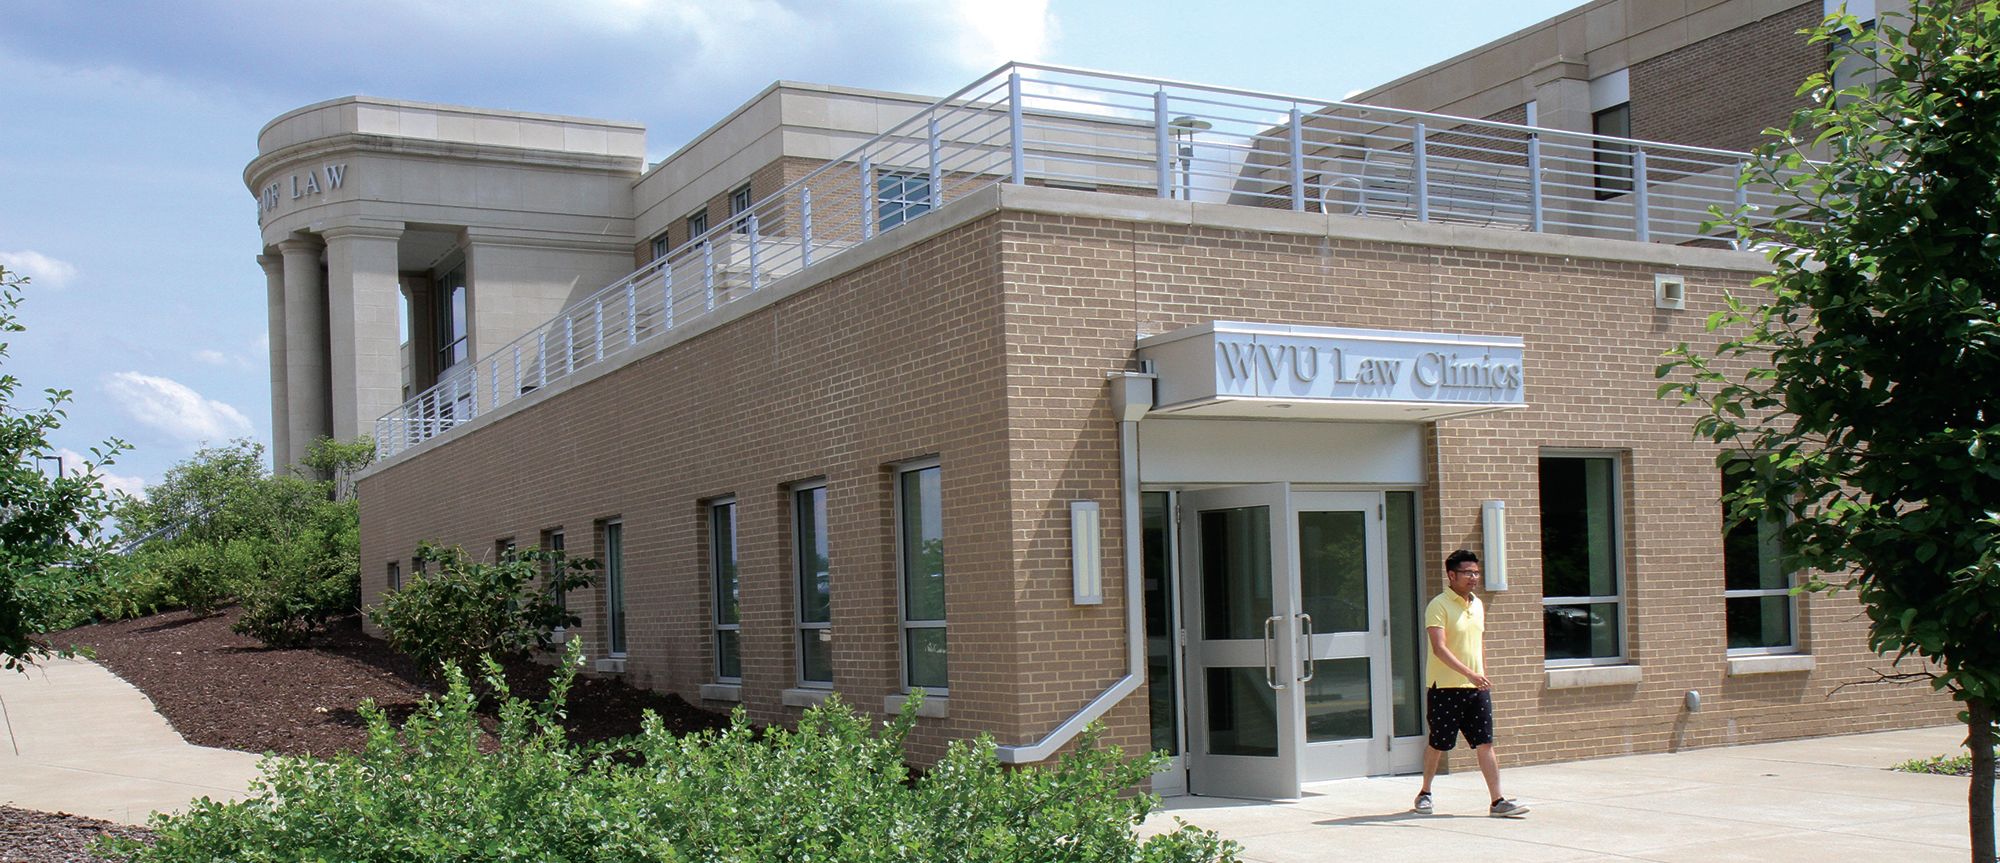 WVU Law Clinical Law Program Entrance